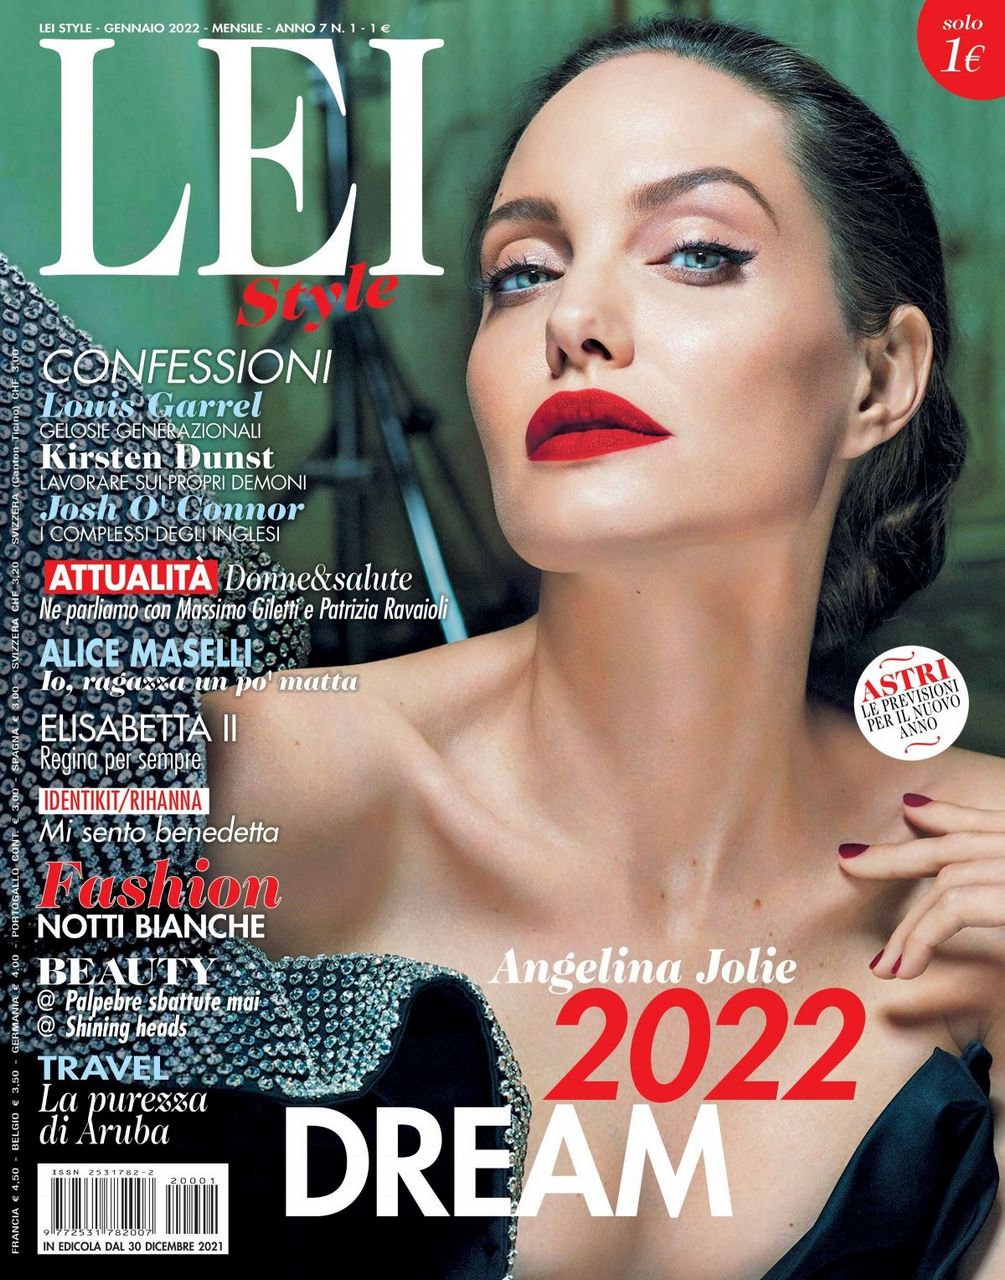 Angelina Jolie For Leistyle Italy January